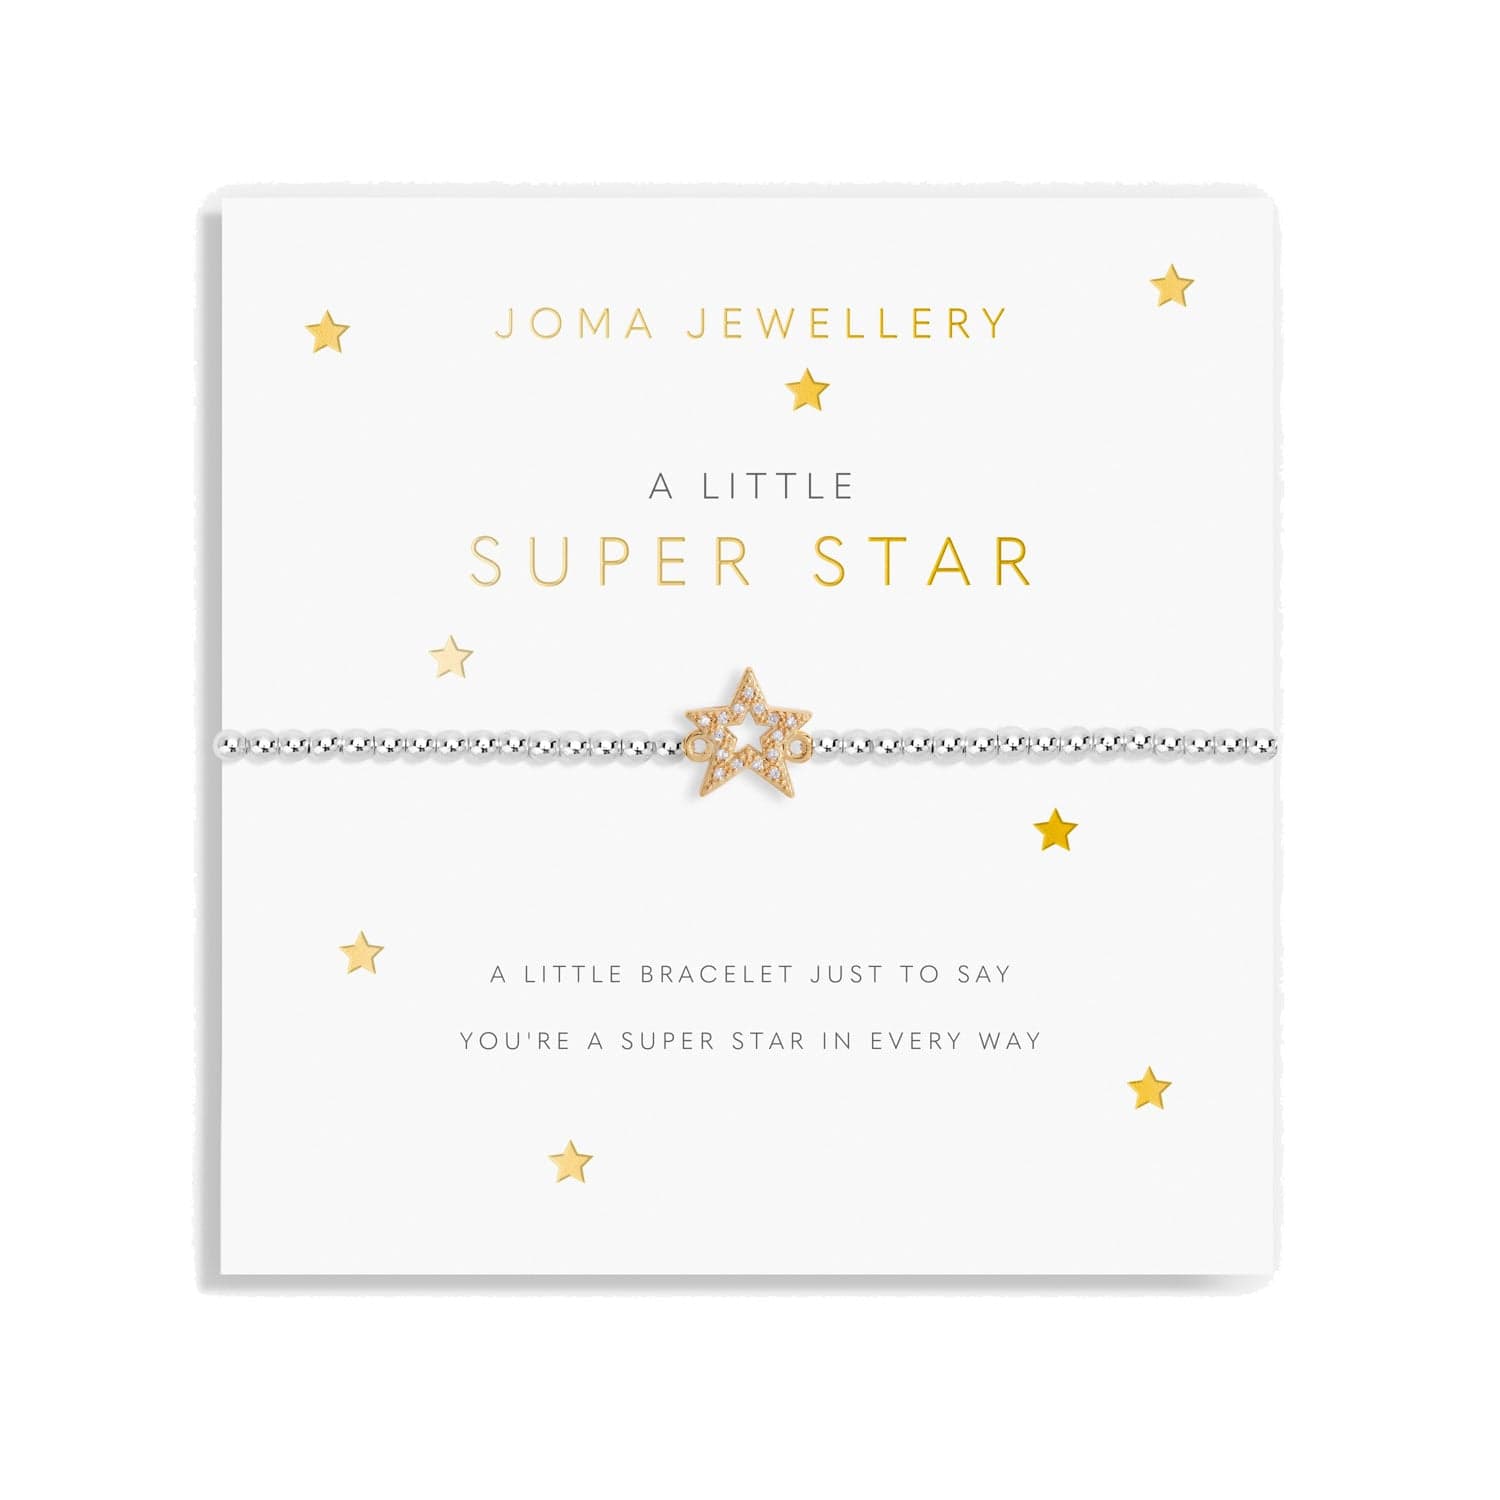 Joma Jewellery Childrens Bracelet Joma Jewellery Children's Bracelet - A Little Super Star